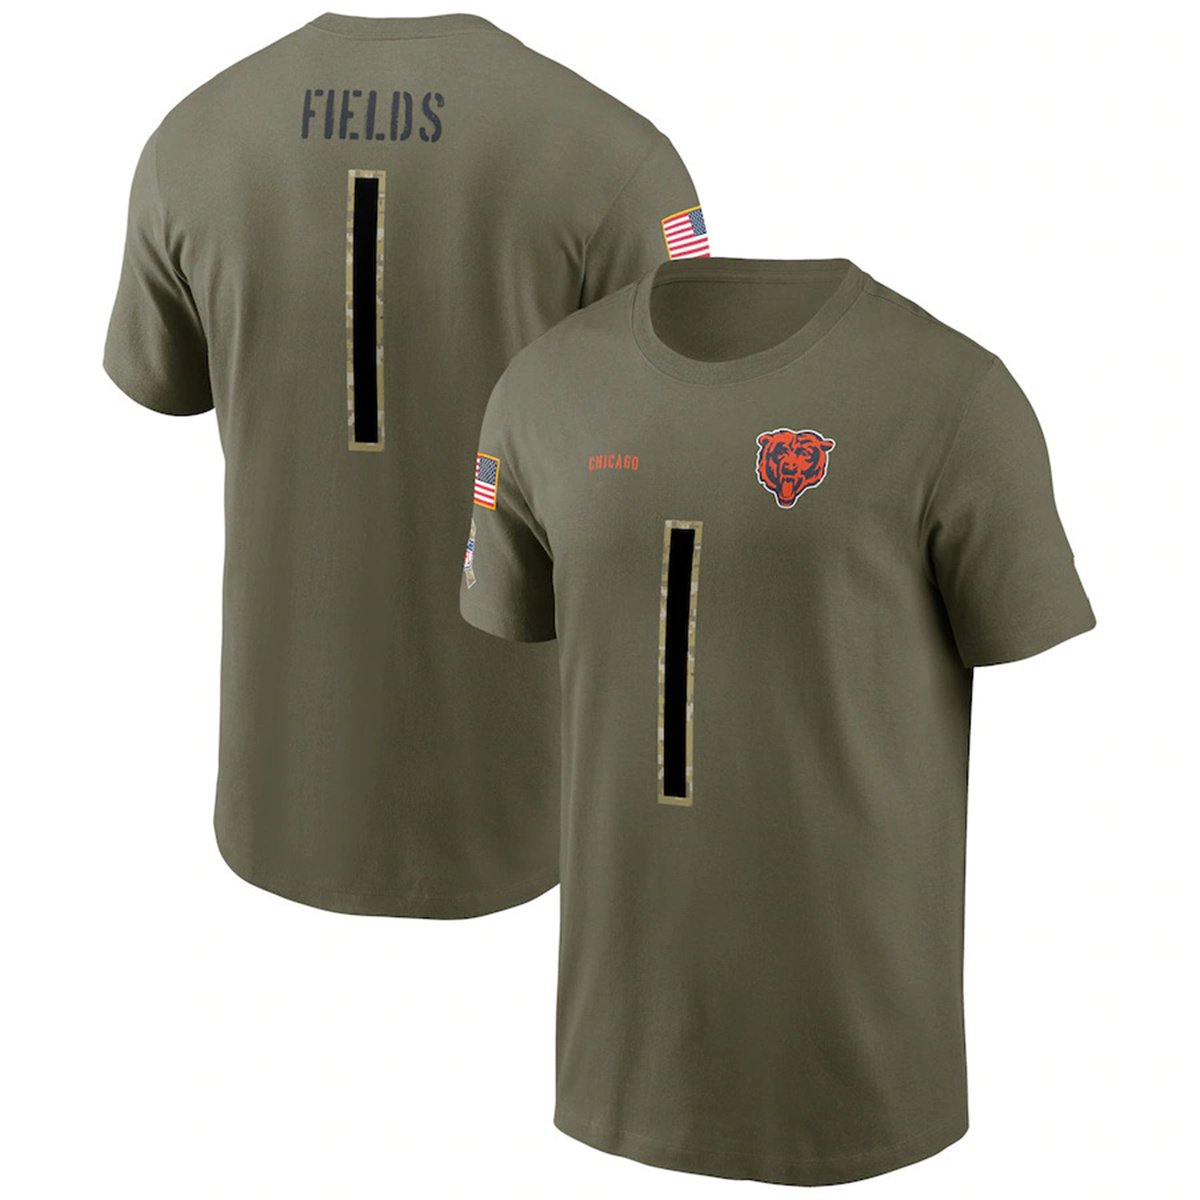 1 Field Fan T-shirt Sport Apparel Chicago Bears American Football Team Tops